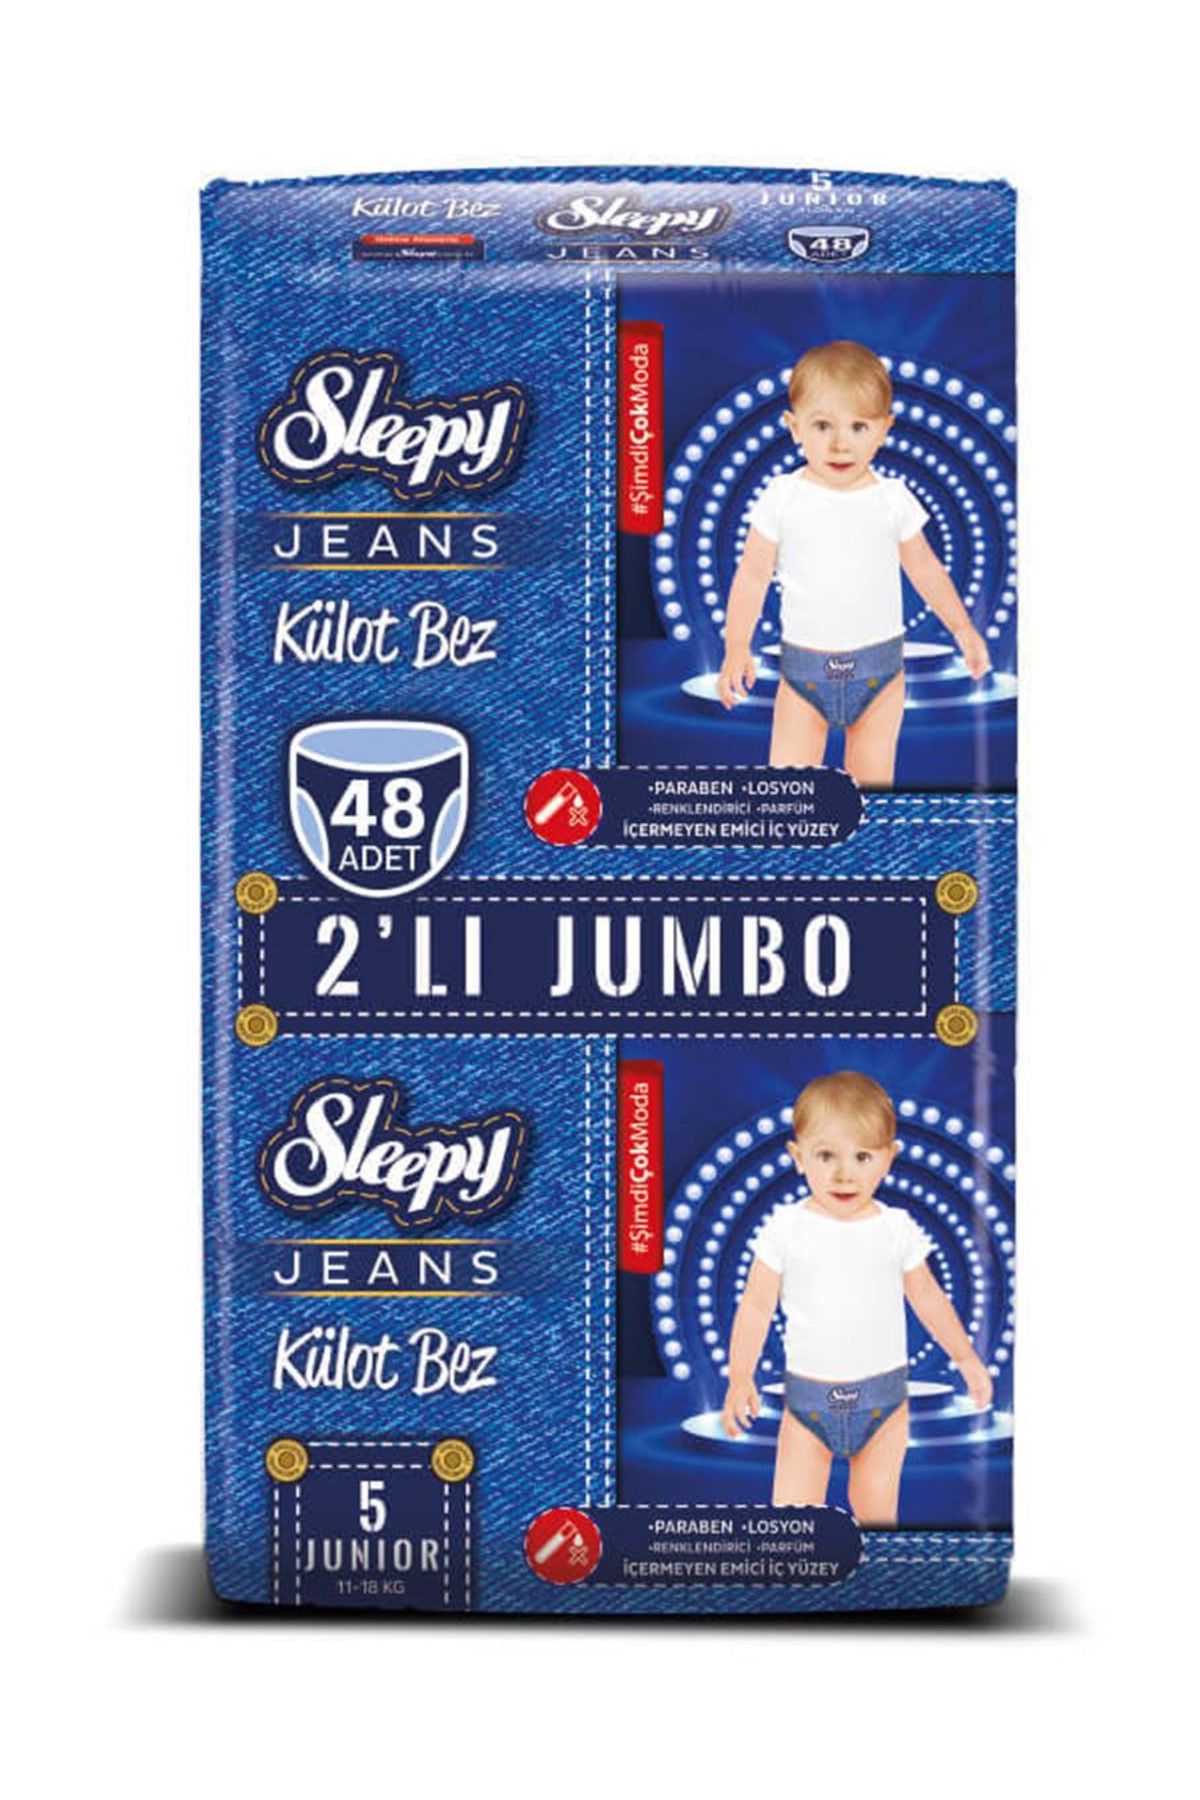 Sleepy Jeans Külot Bez 5 Beden Junior 2'li Jumbo 48 Adet (11-18KG)